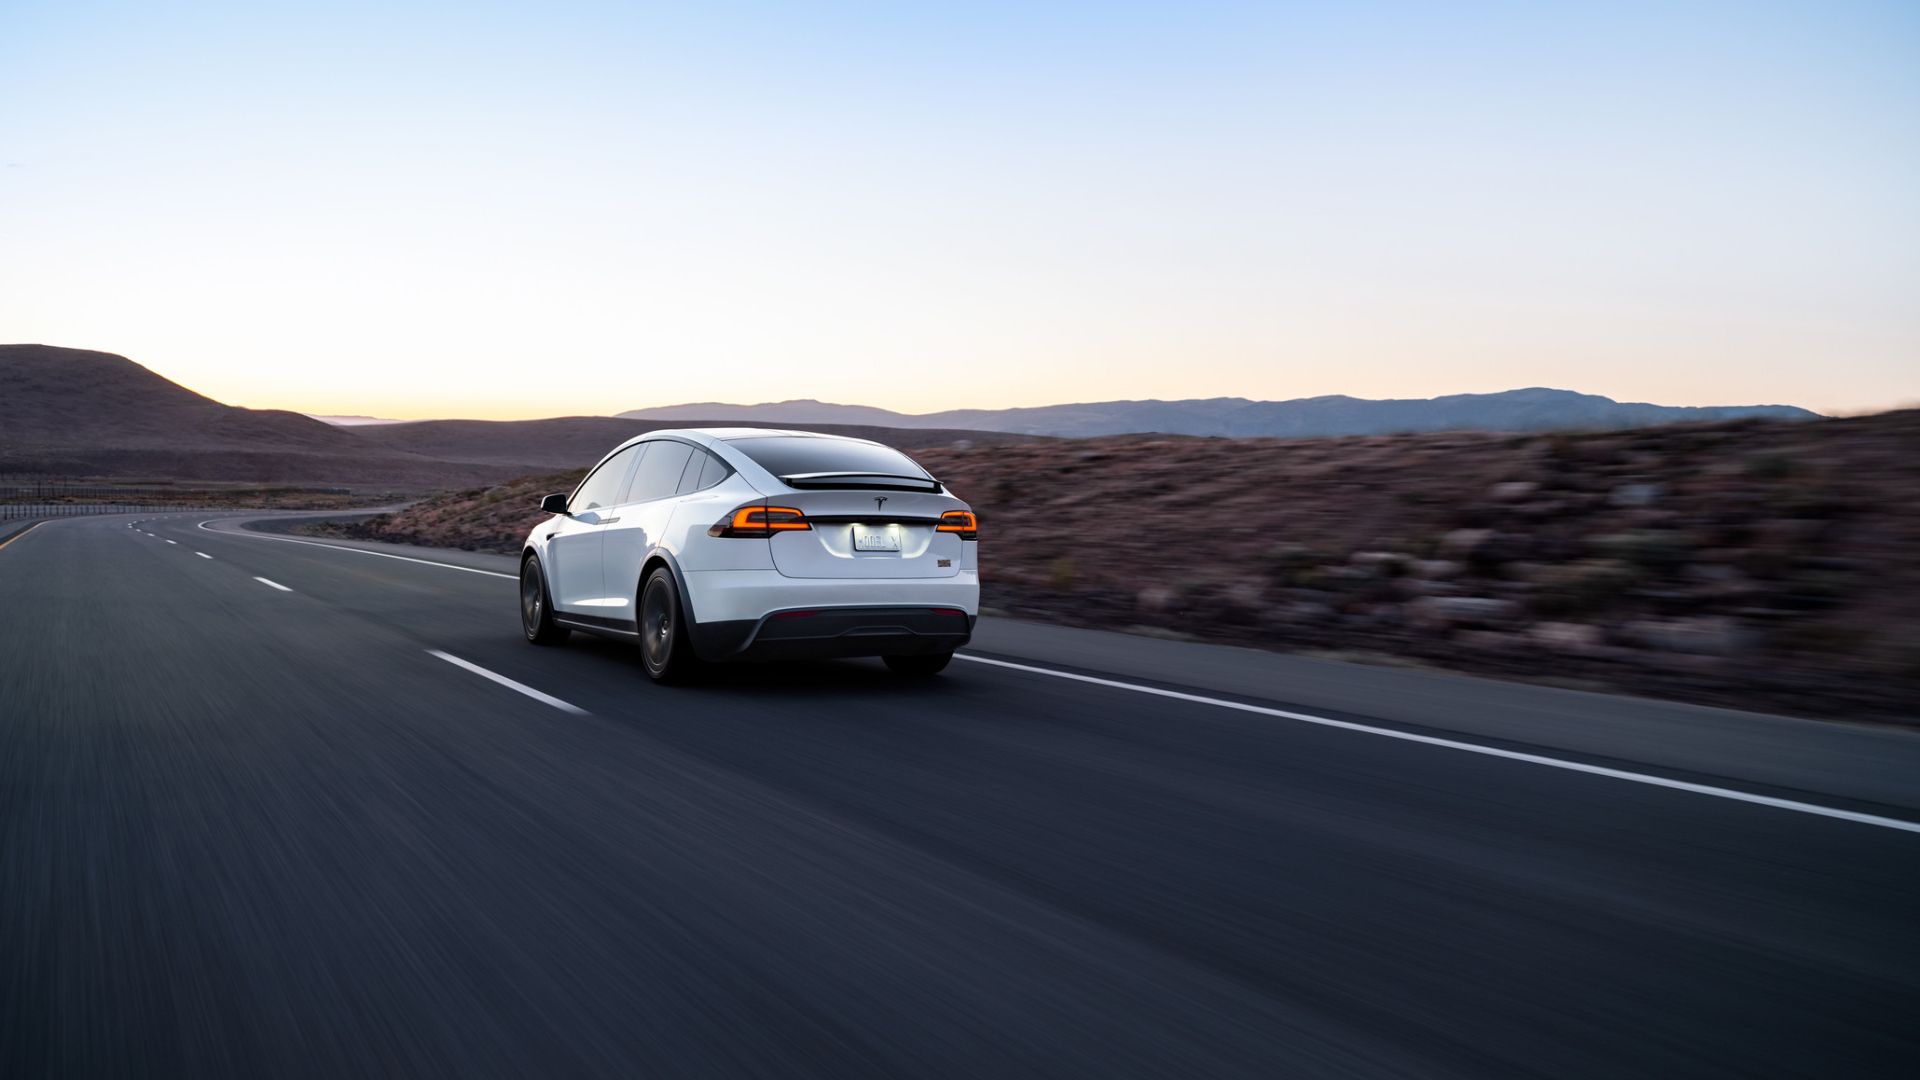 Bidikan sudut belakang Tesla Model X di jalan